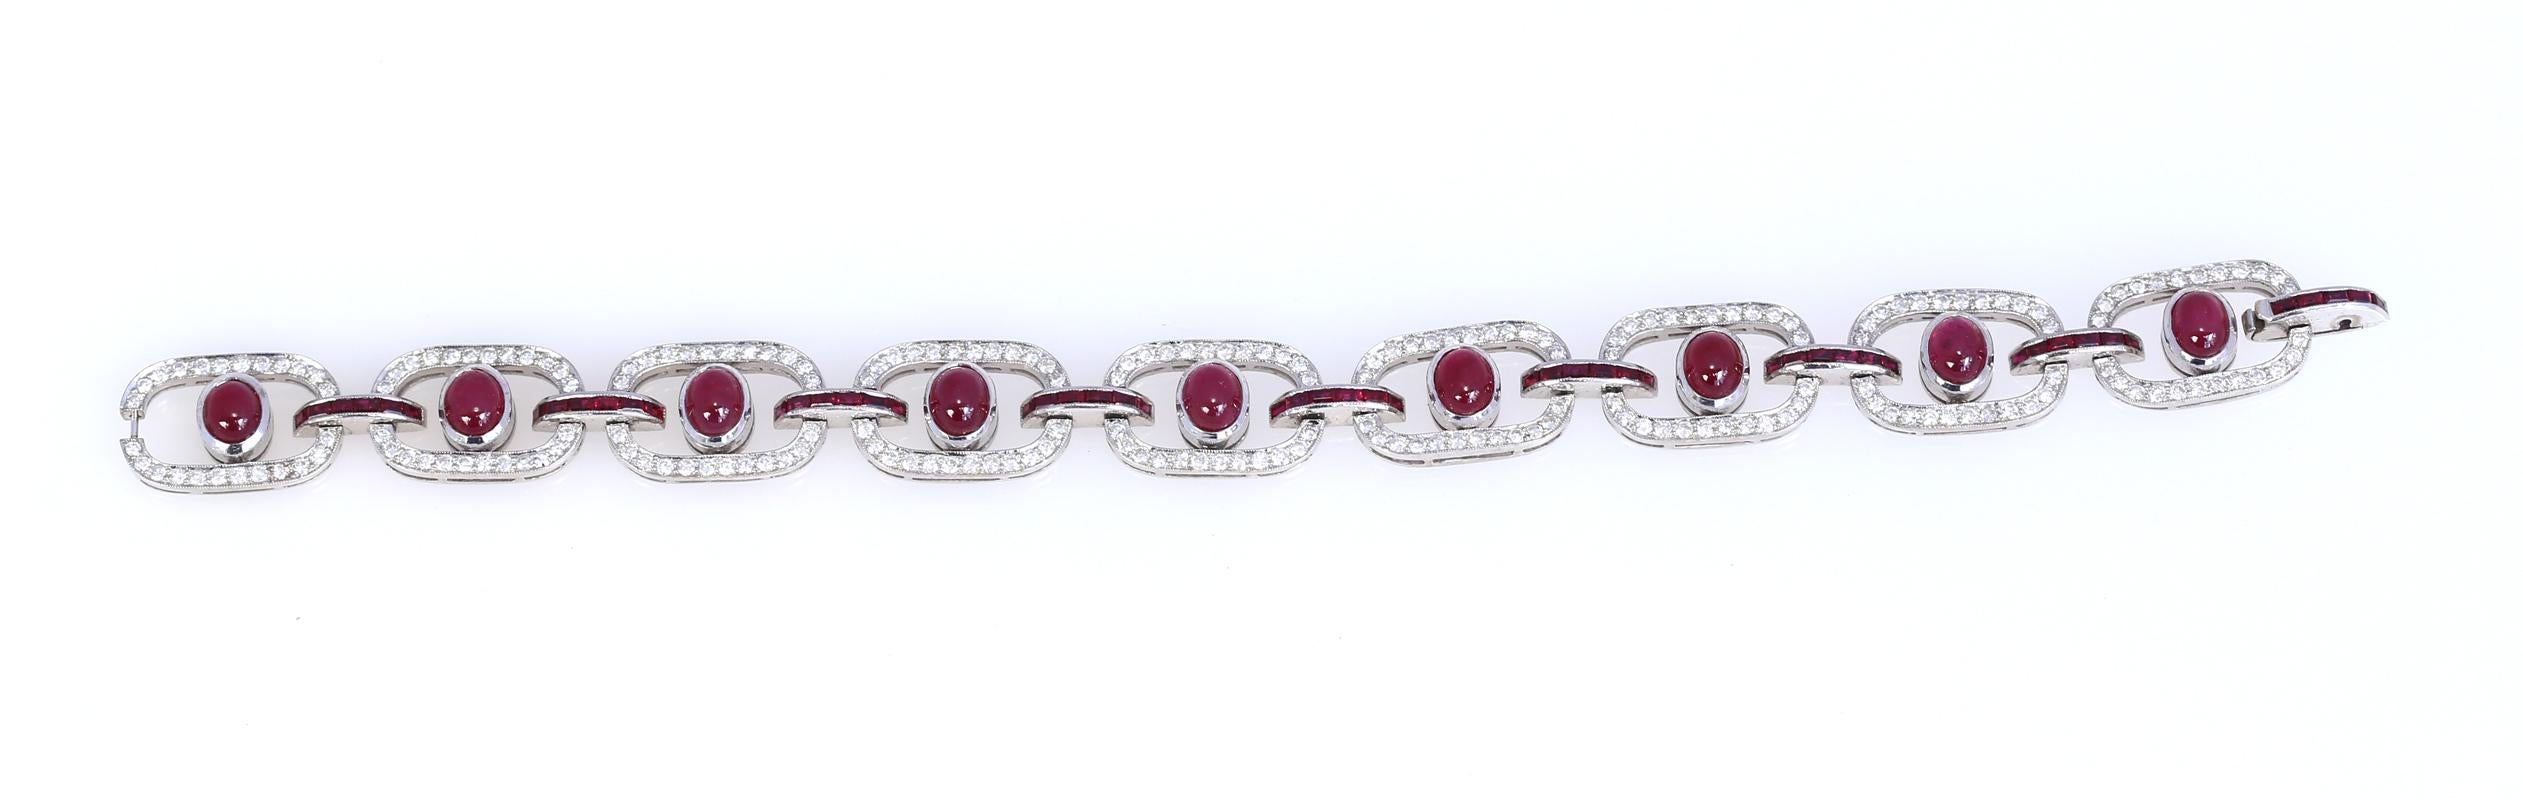 3 Bracelets Set Sapphires Rubies Diamonds Emeralds Necklace Сhoker White Gold For Sale 13